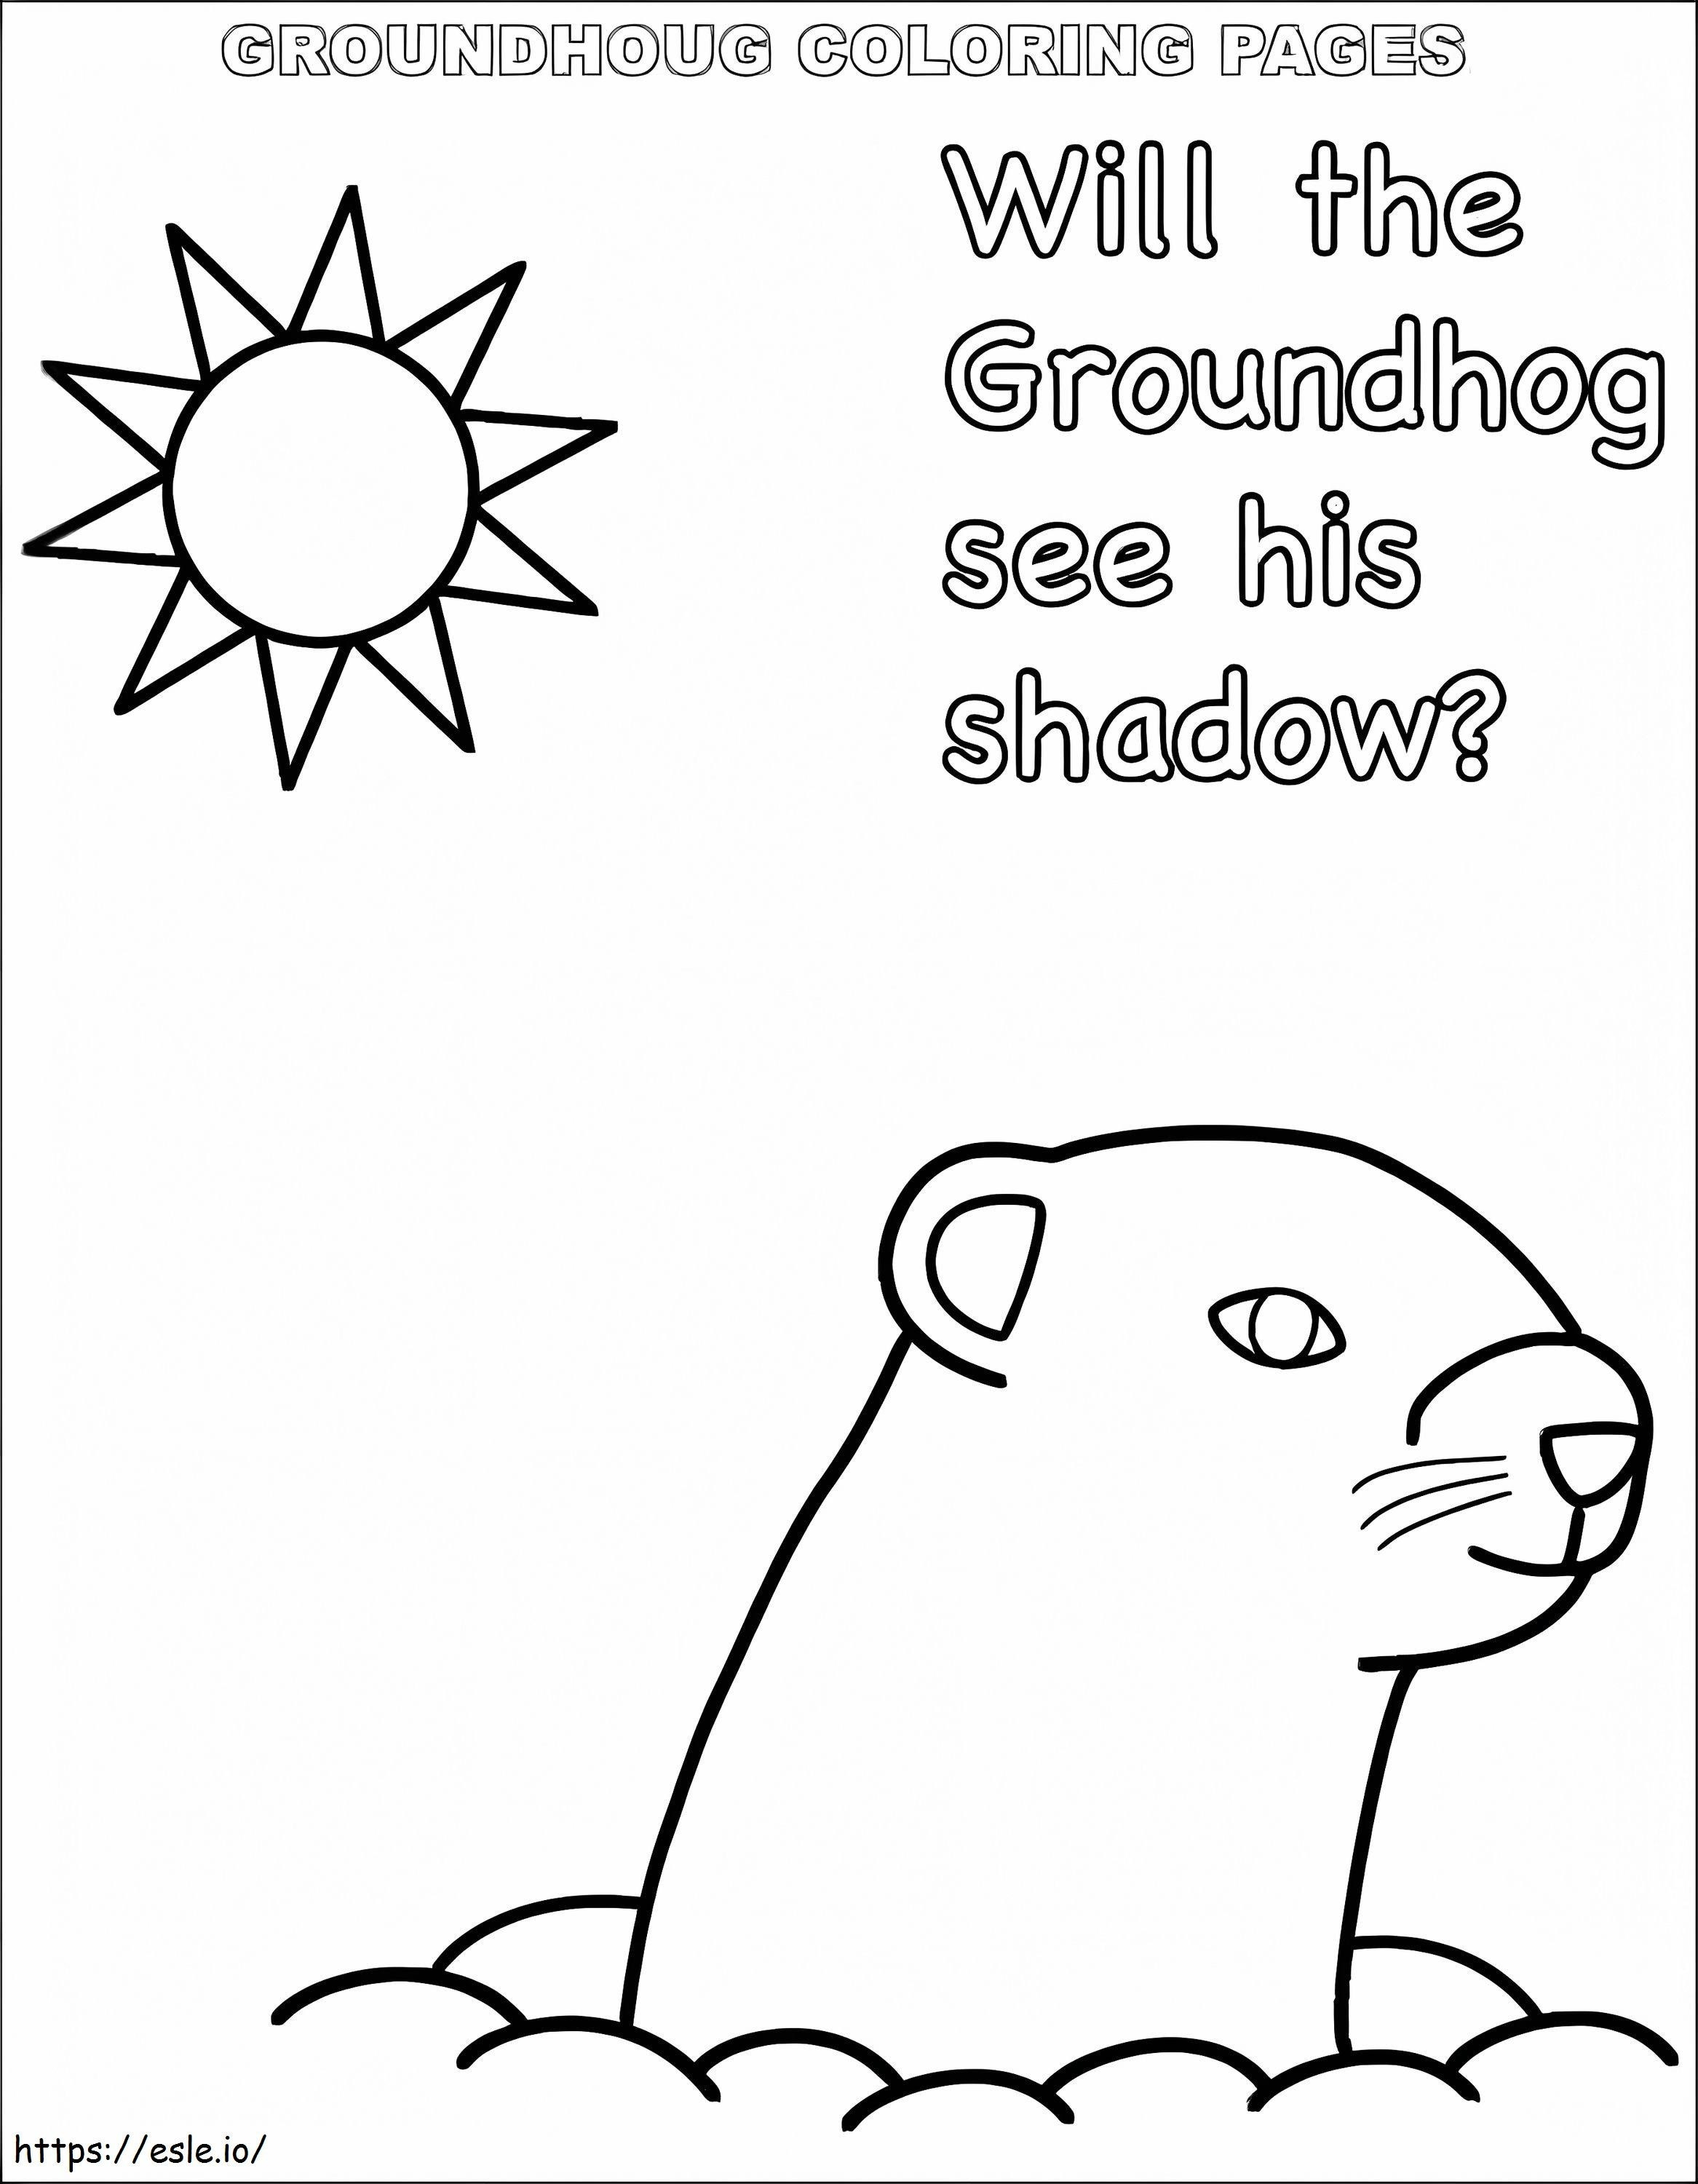 Fijne Groundhog-dag 5 kleurplaat kleurplaat